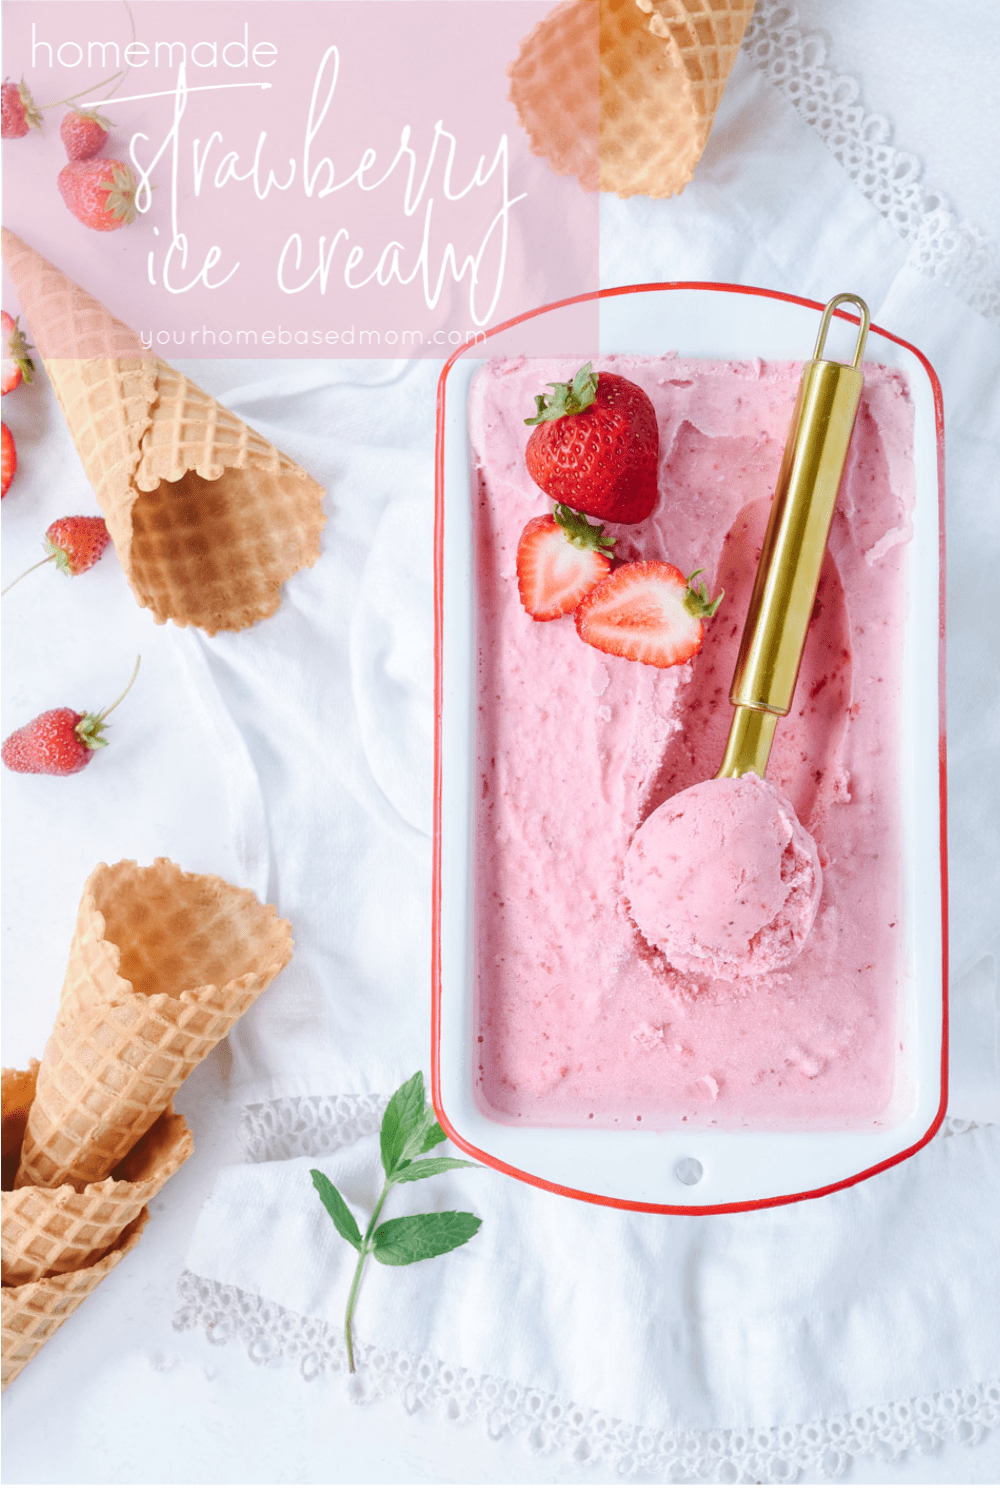 bowl of homemade strawberry ice cream